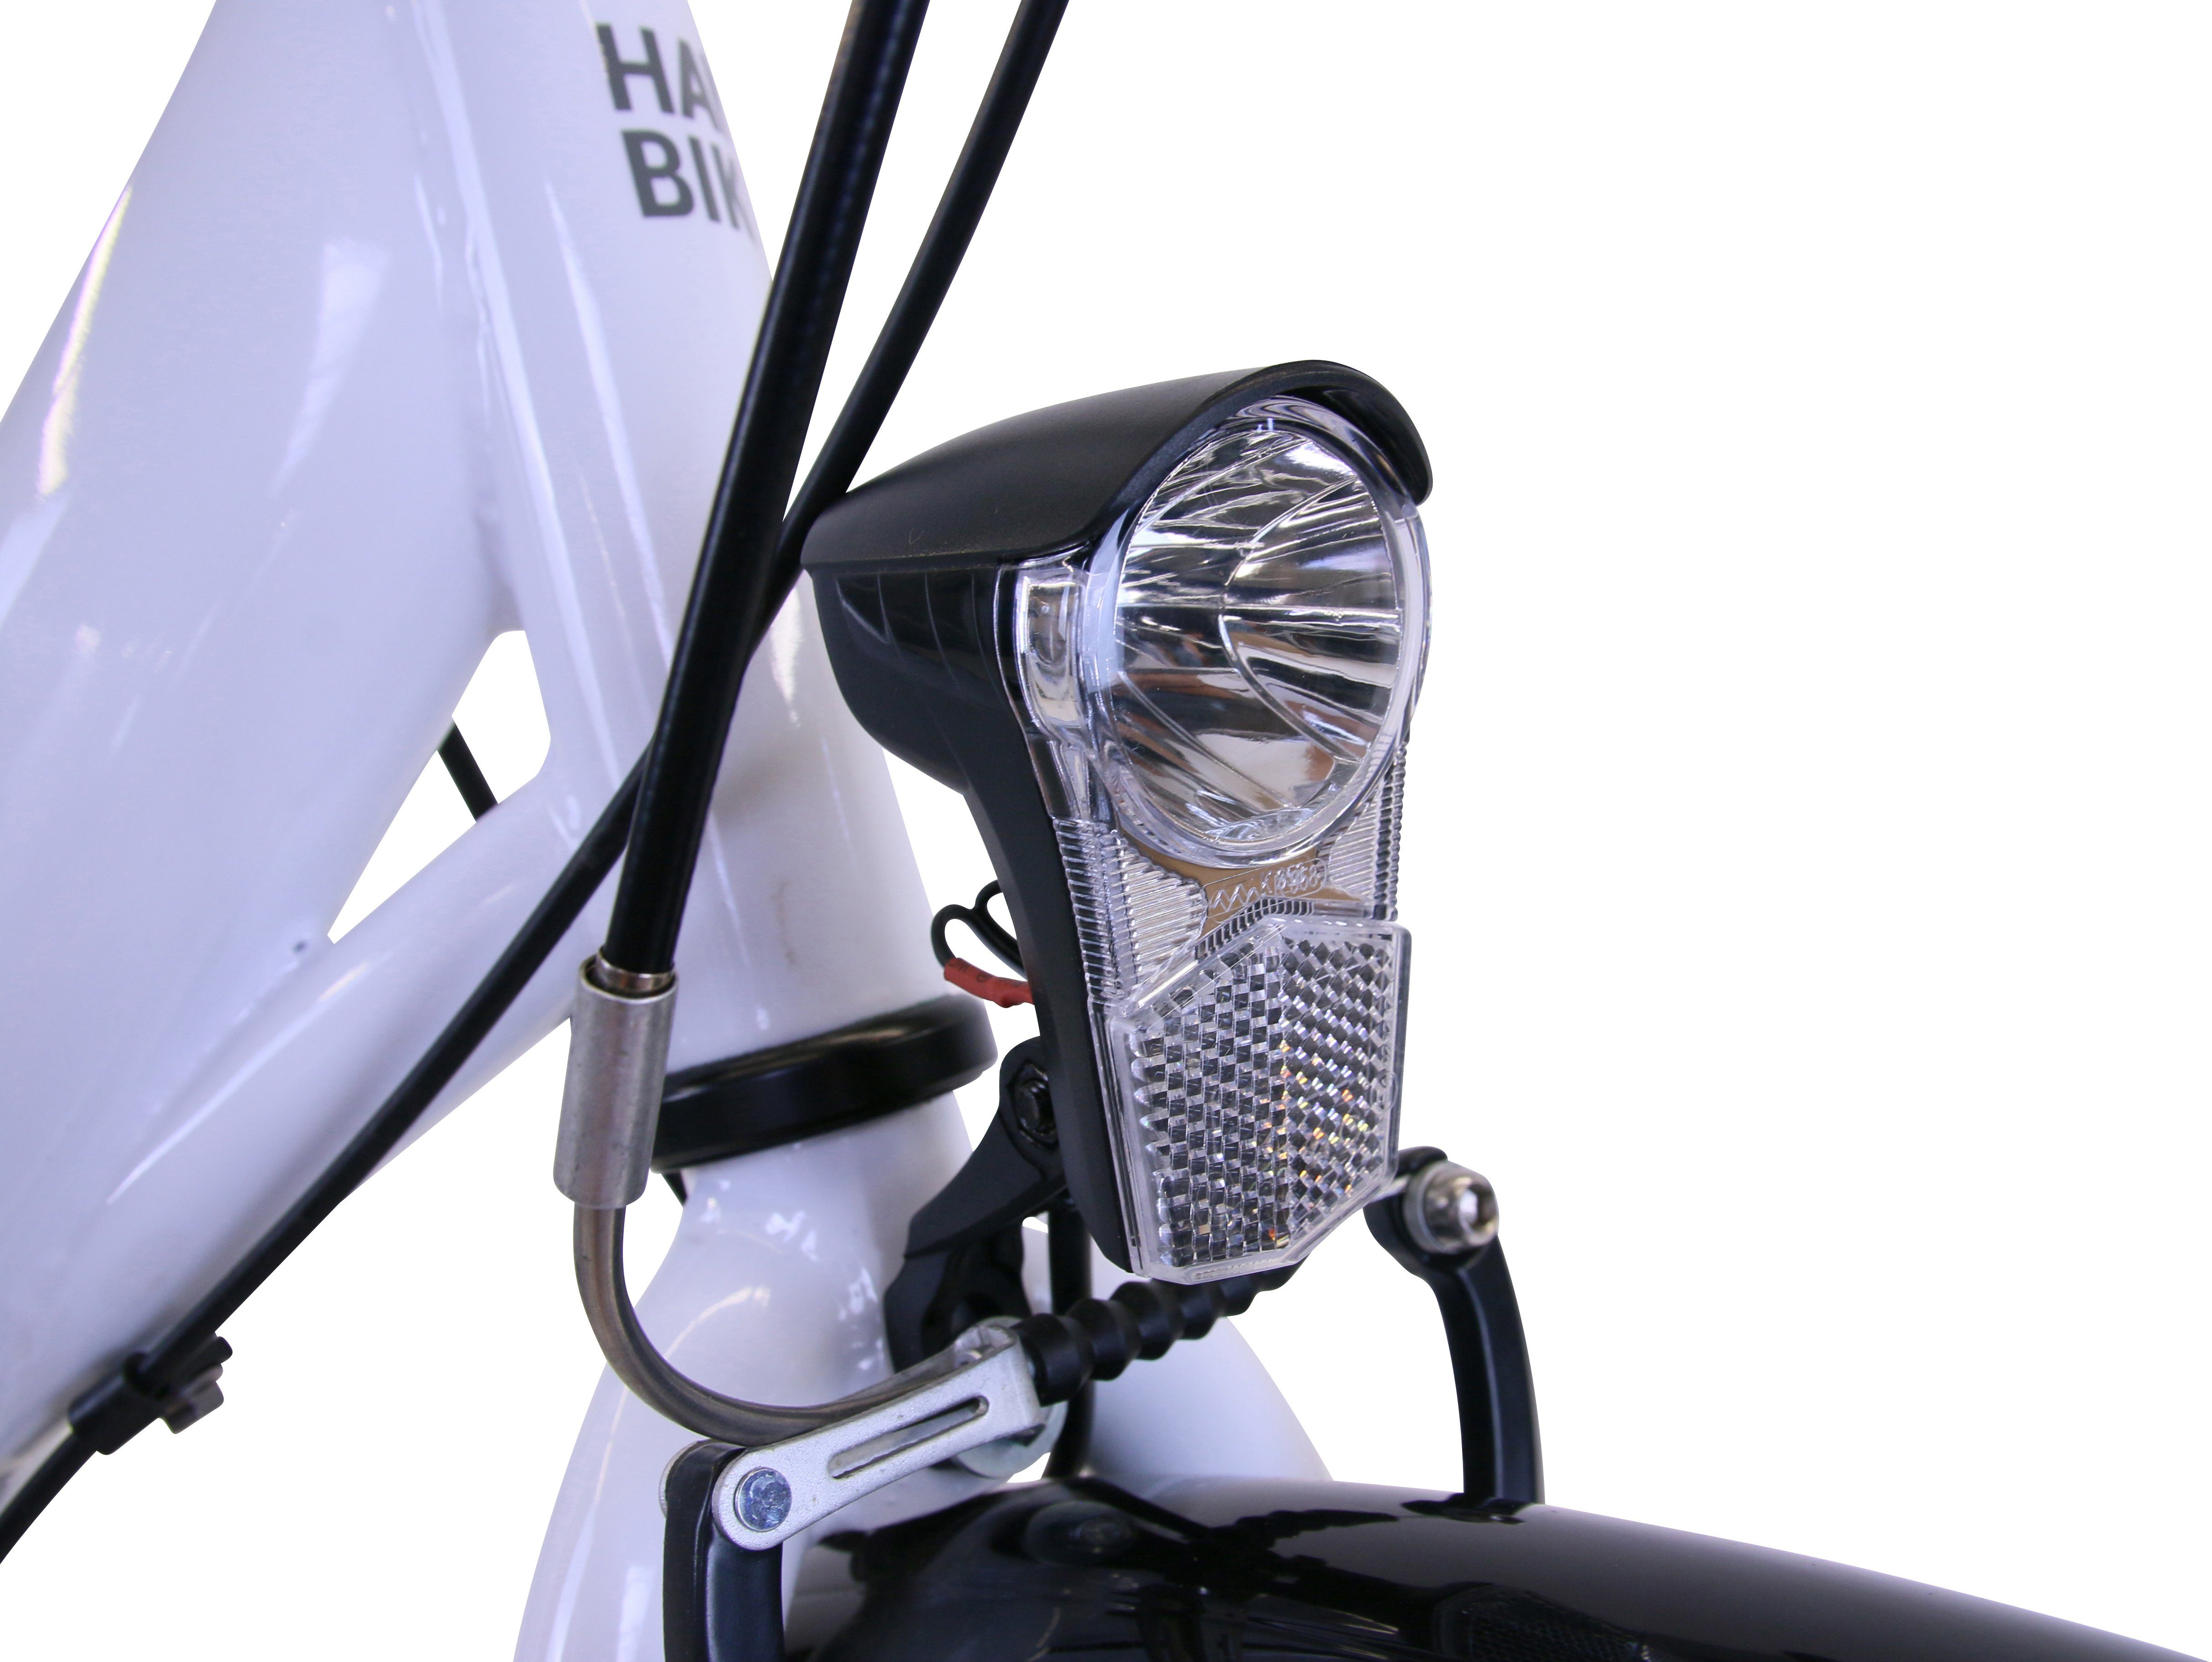 Gang HAWK Wave Nexus White, Schaltwerk Plus City Shimano Bikes 3 HAWK Premium Cityrad